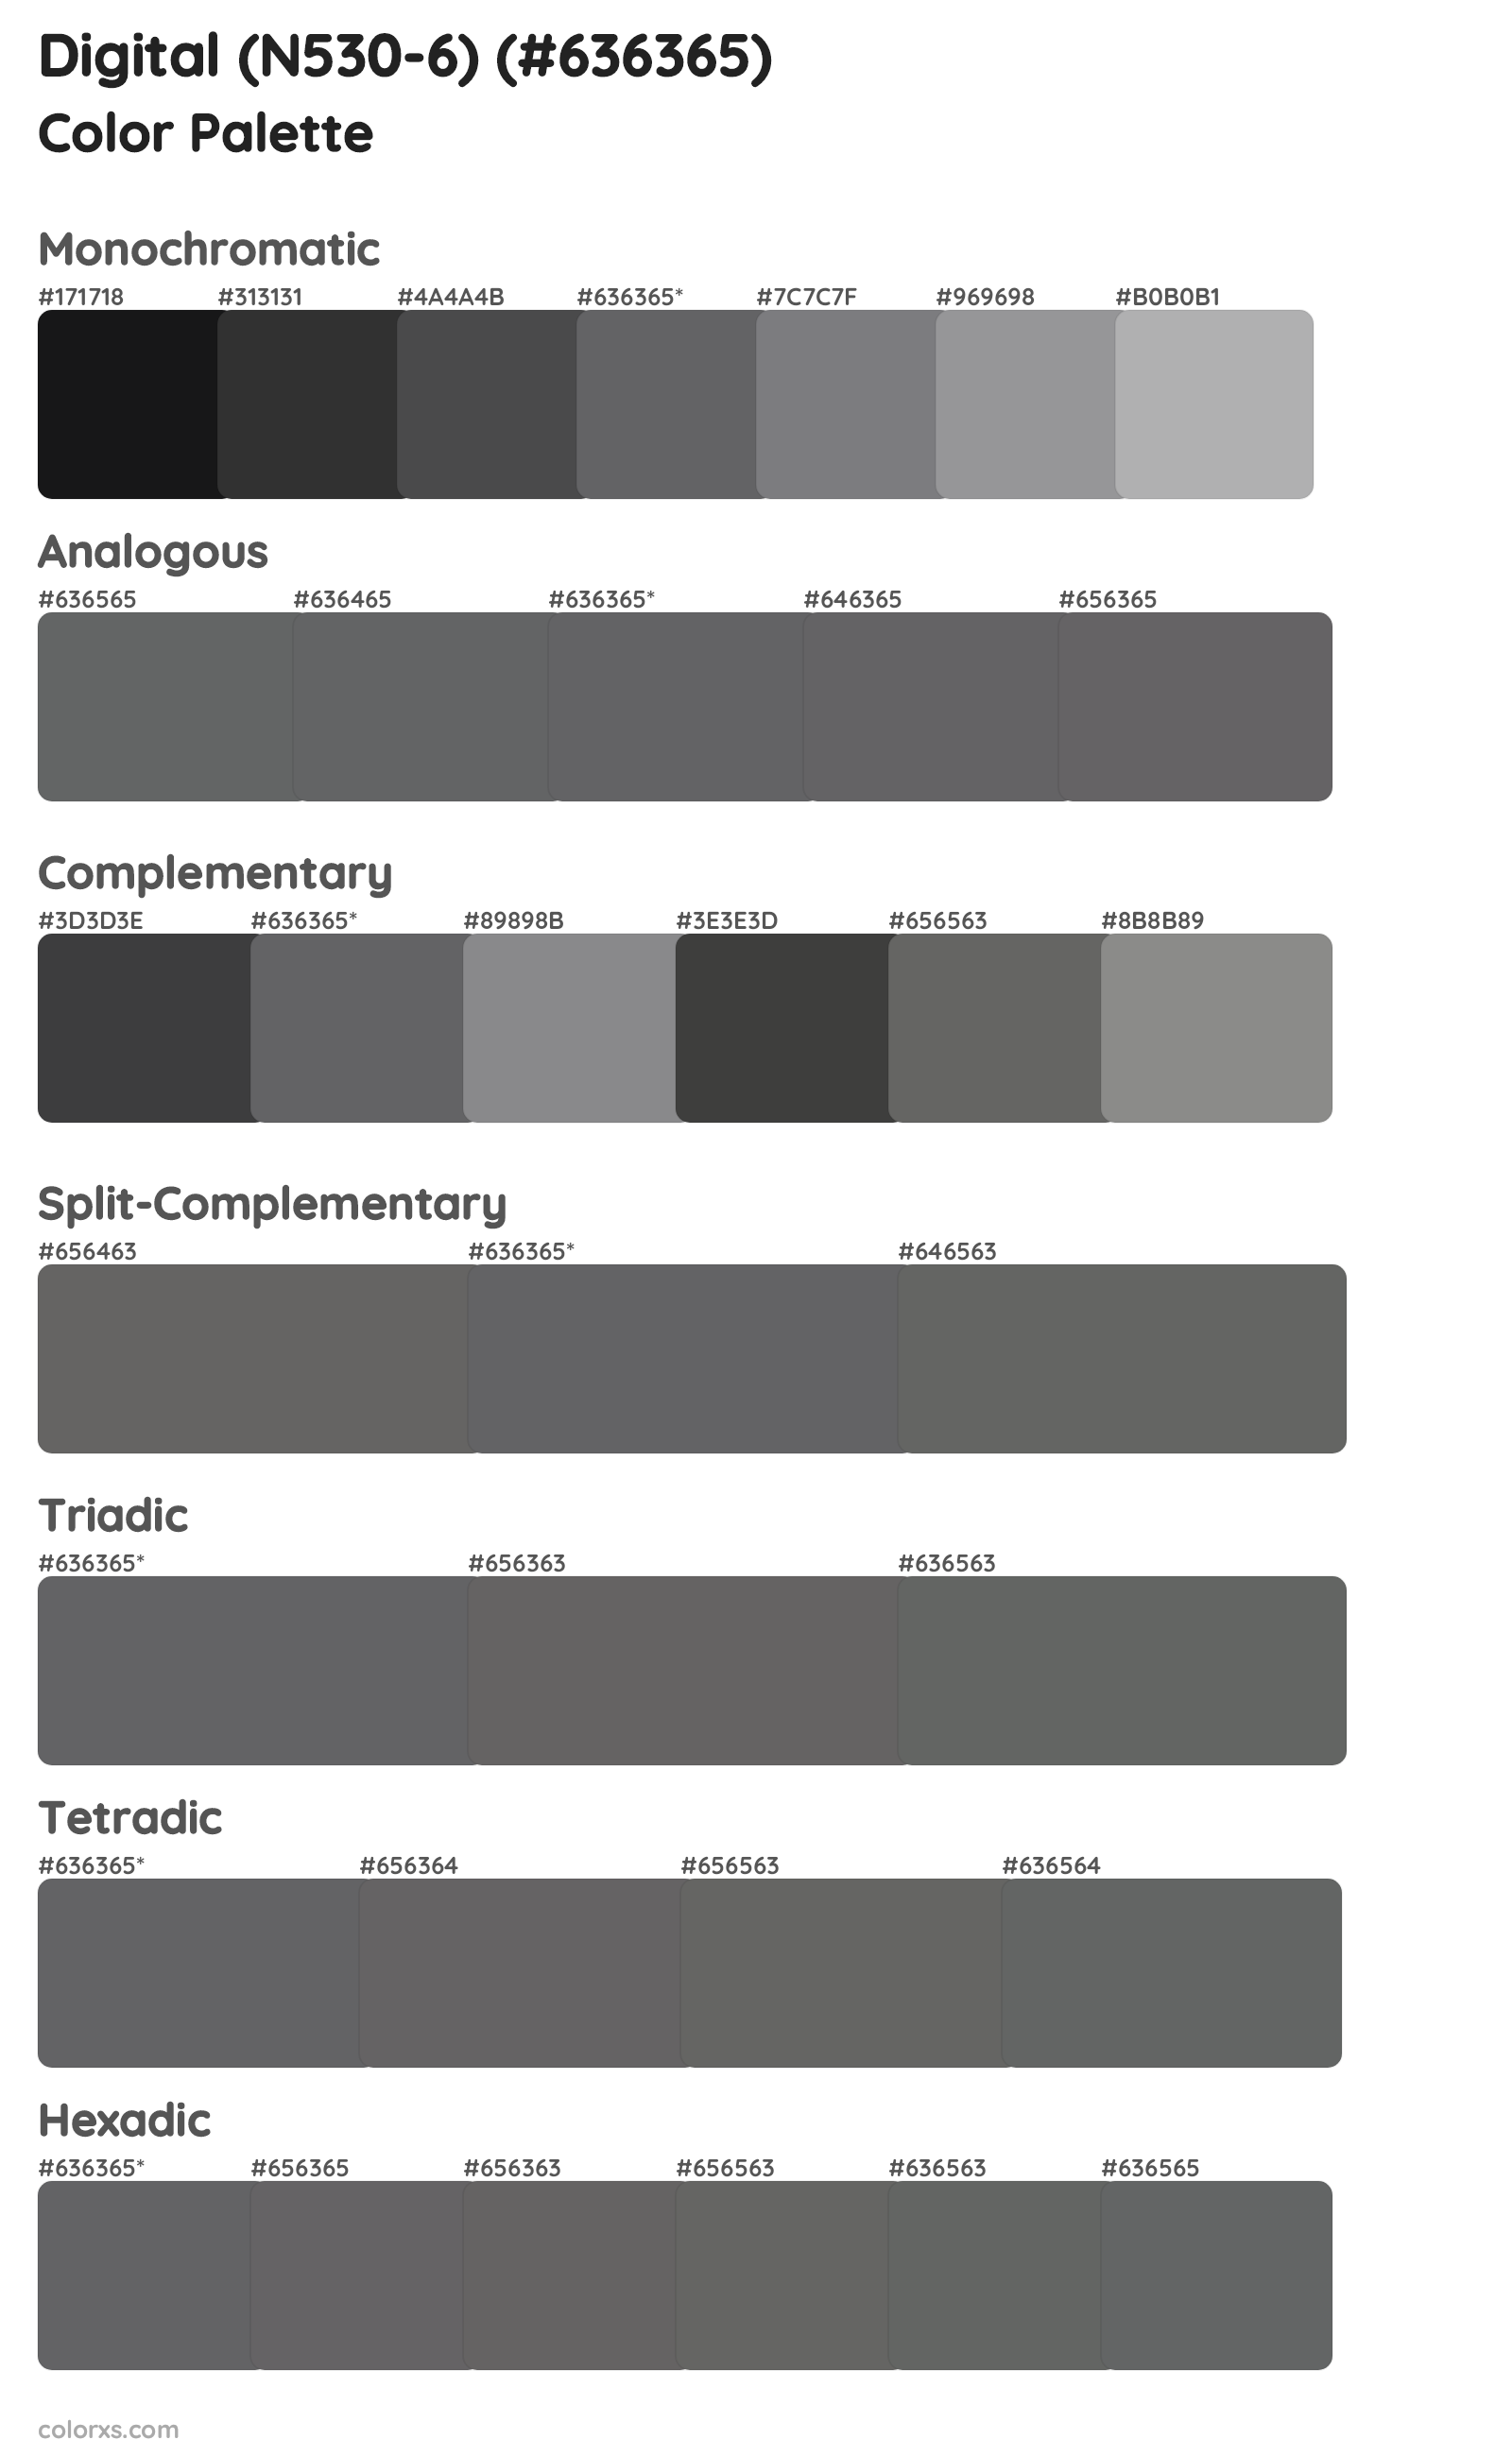 Digital (N530-6) Color Scheme Palettes